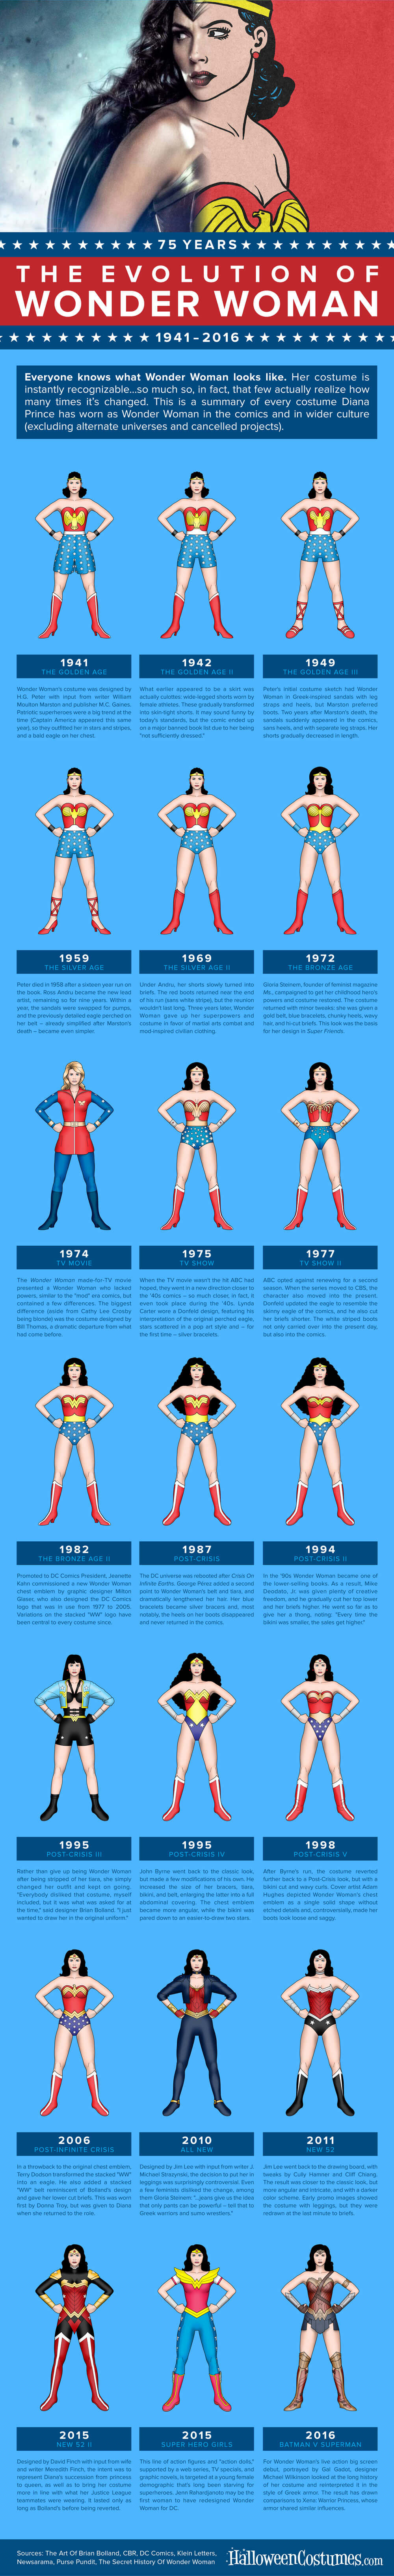 The Evolution of Wonder Woman